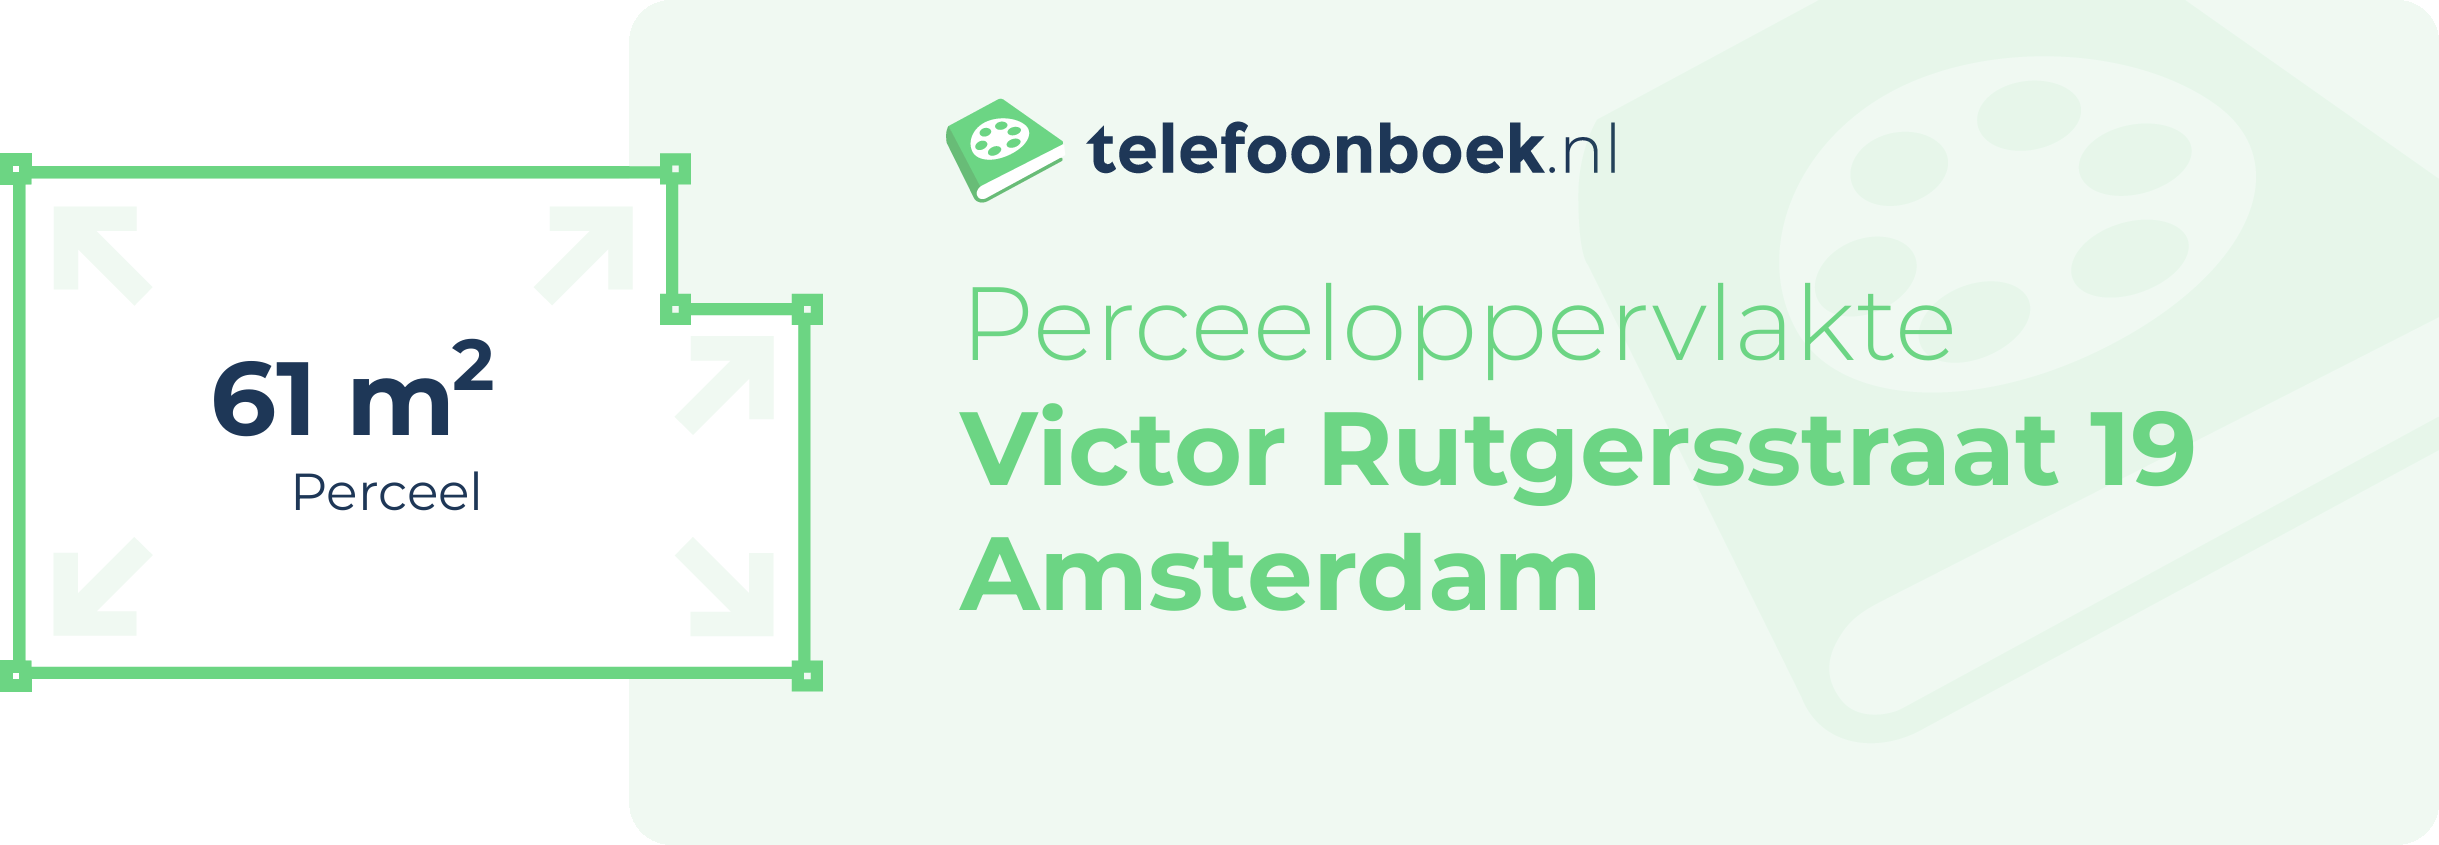 Perceeloppervlakte Victor Rutgersstraat 19 Amsterdam